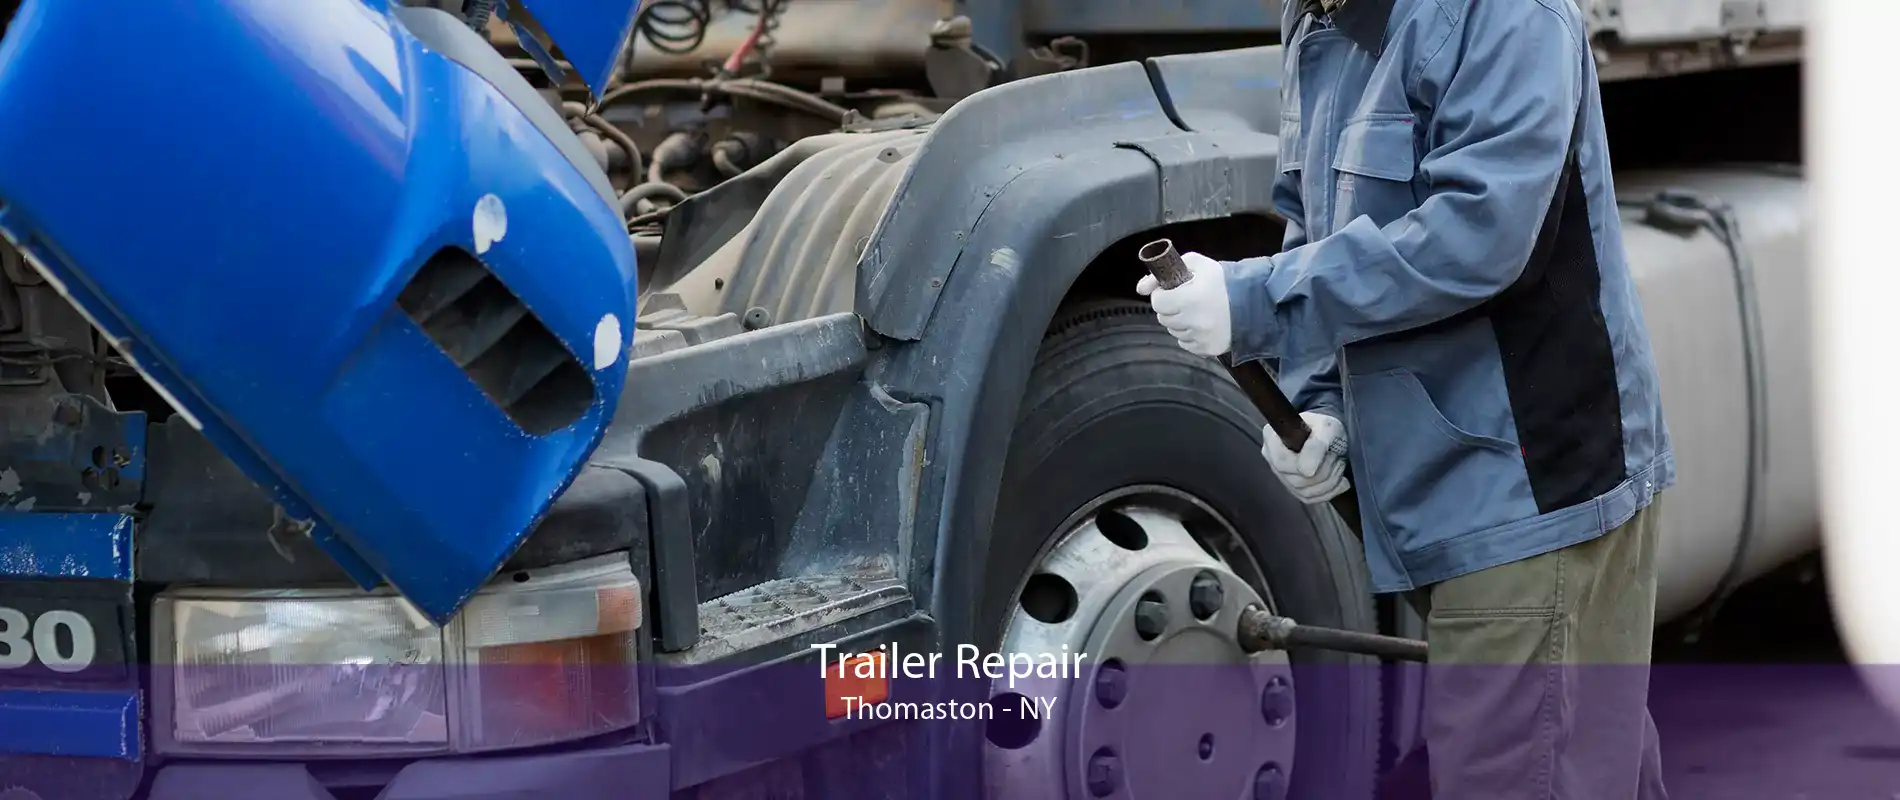 Trailer Repair Thomaston - NY